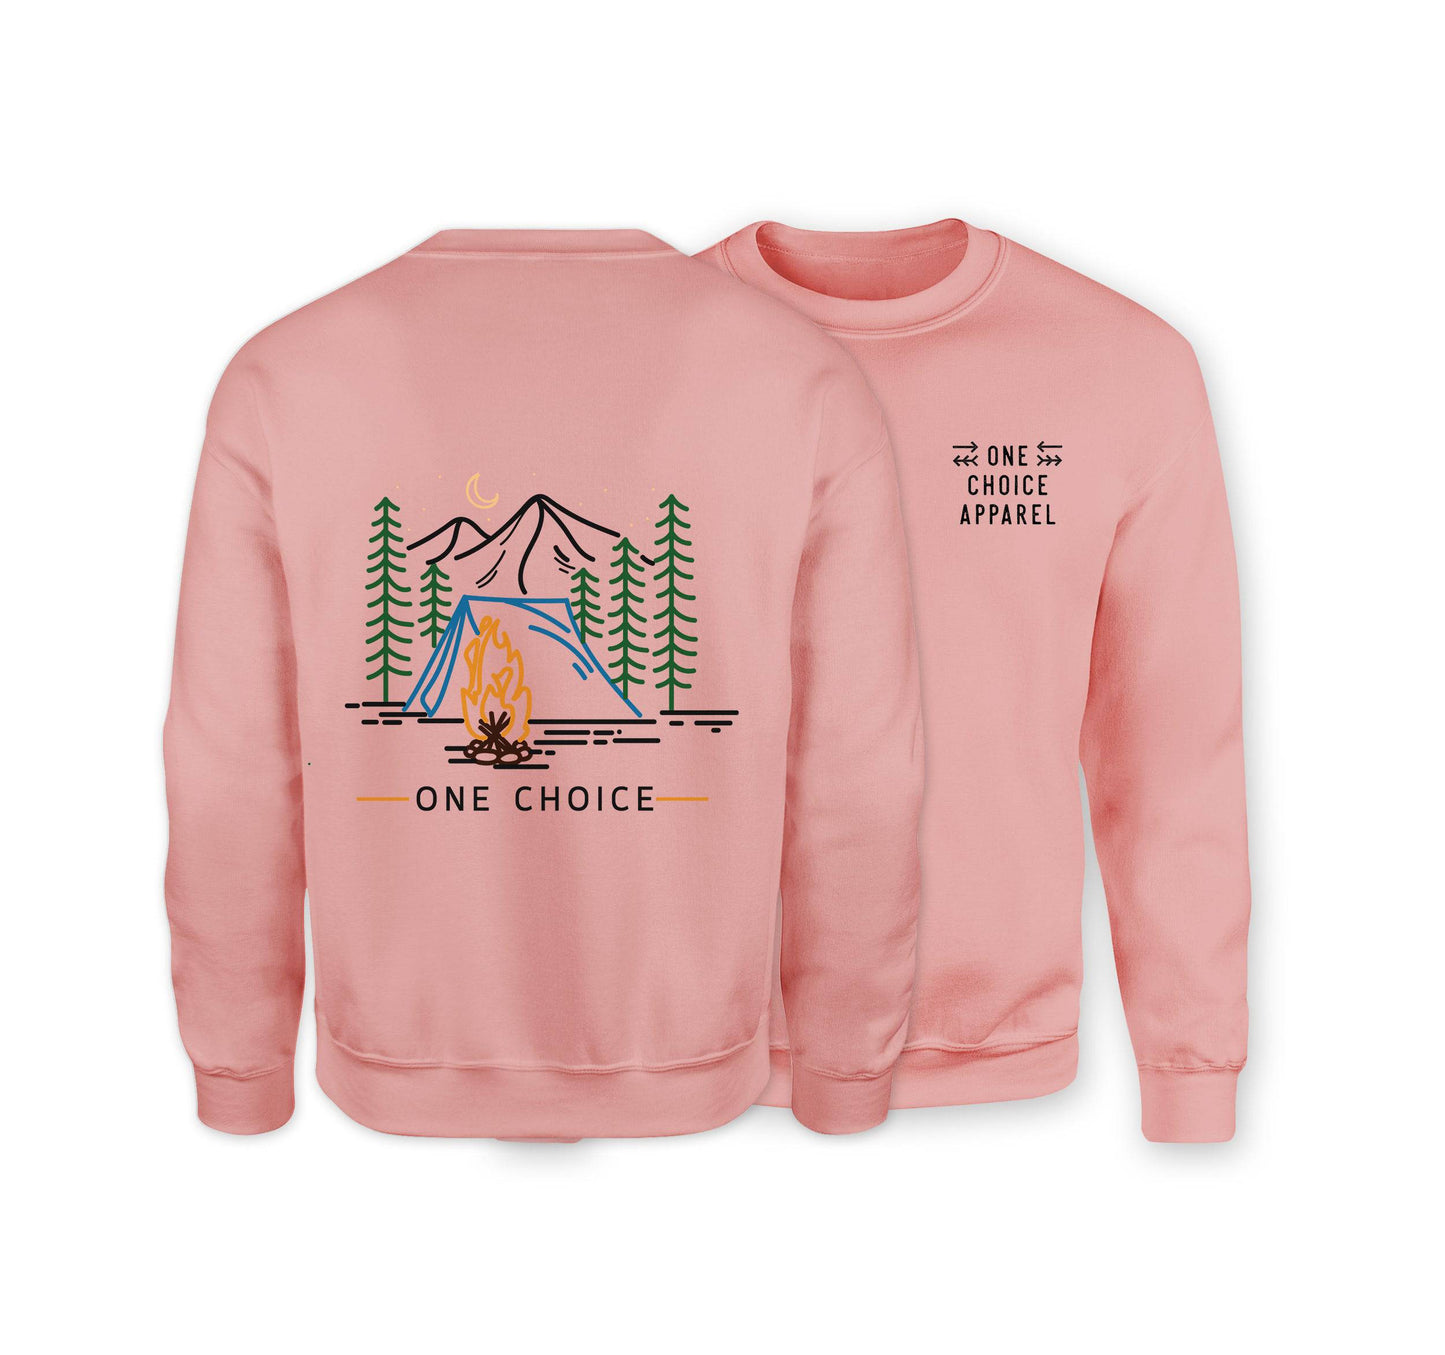 Bonfire Scene Sweatshirt - Organic Cotton Sweatshirt - One Choice Apparel